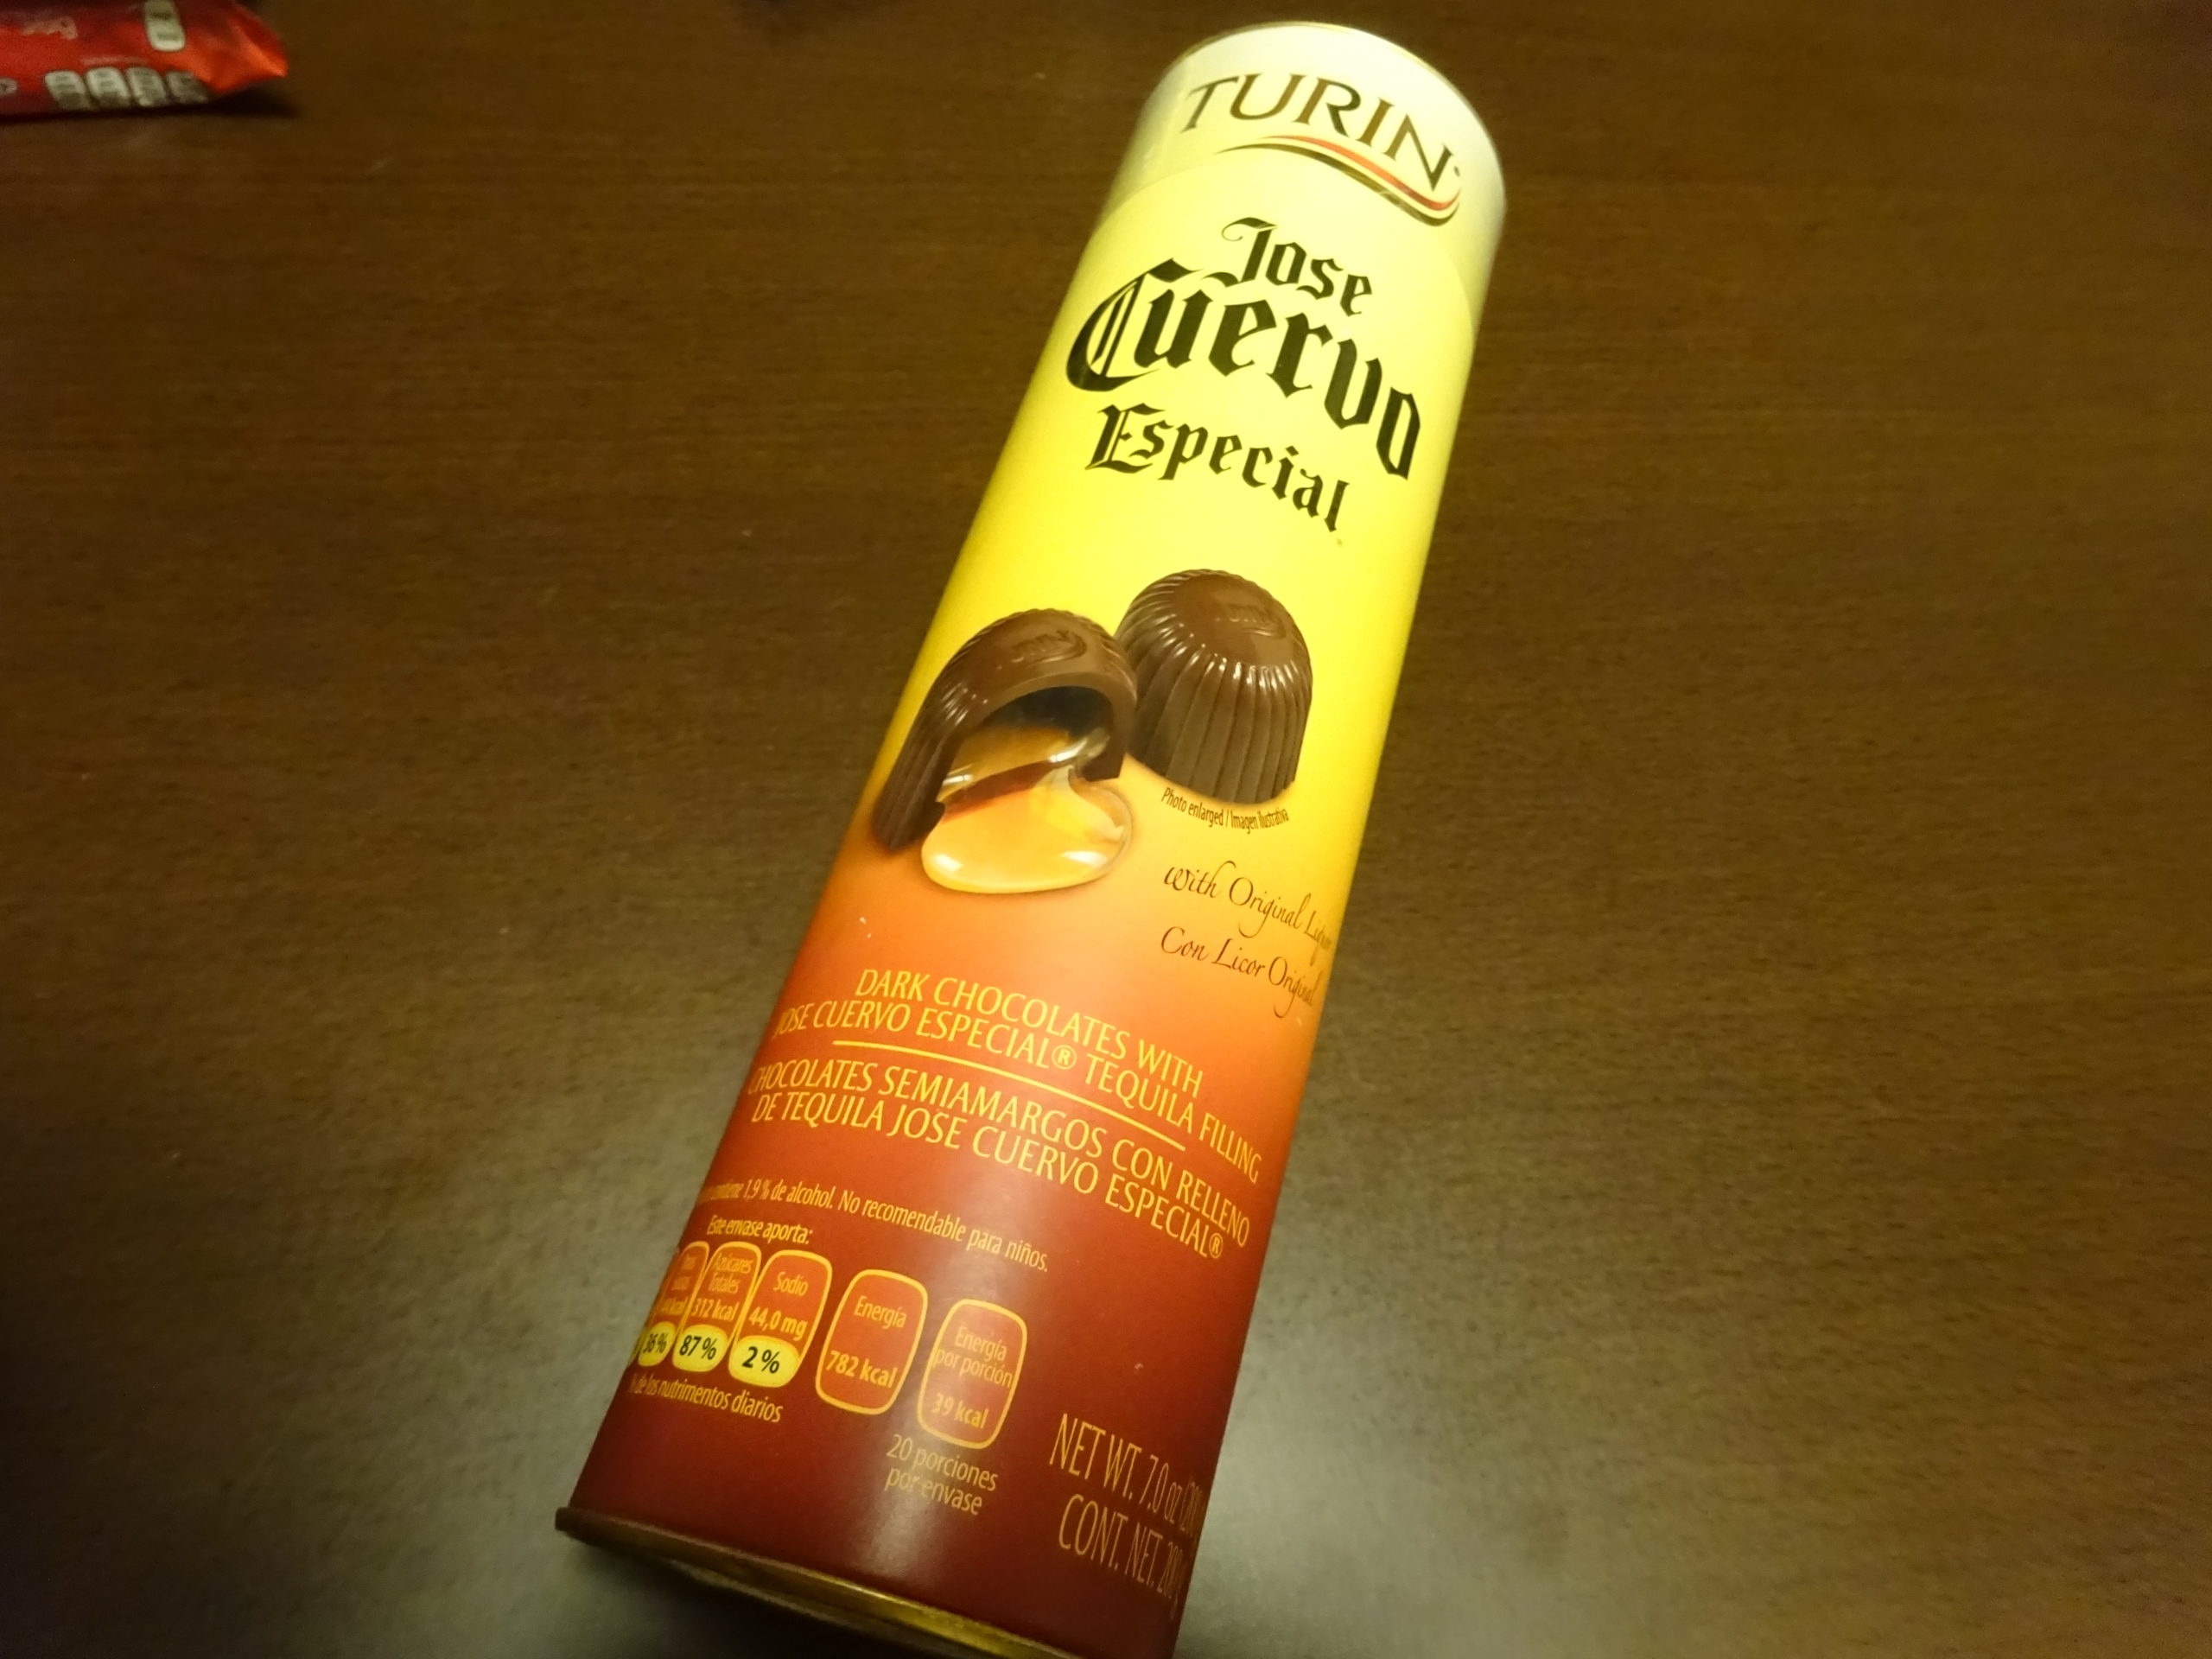 TURIN社のテキーラ入りチョコレート